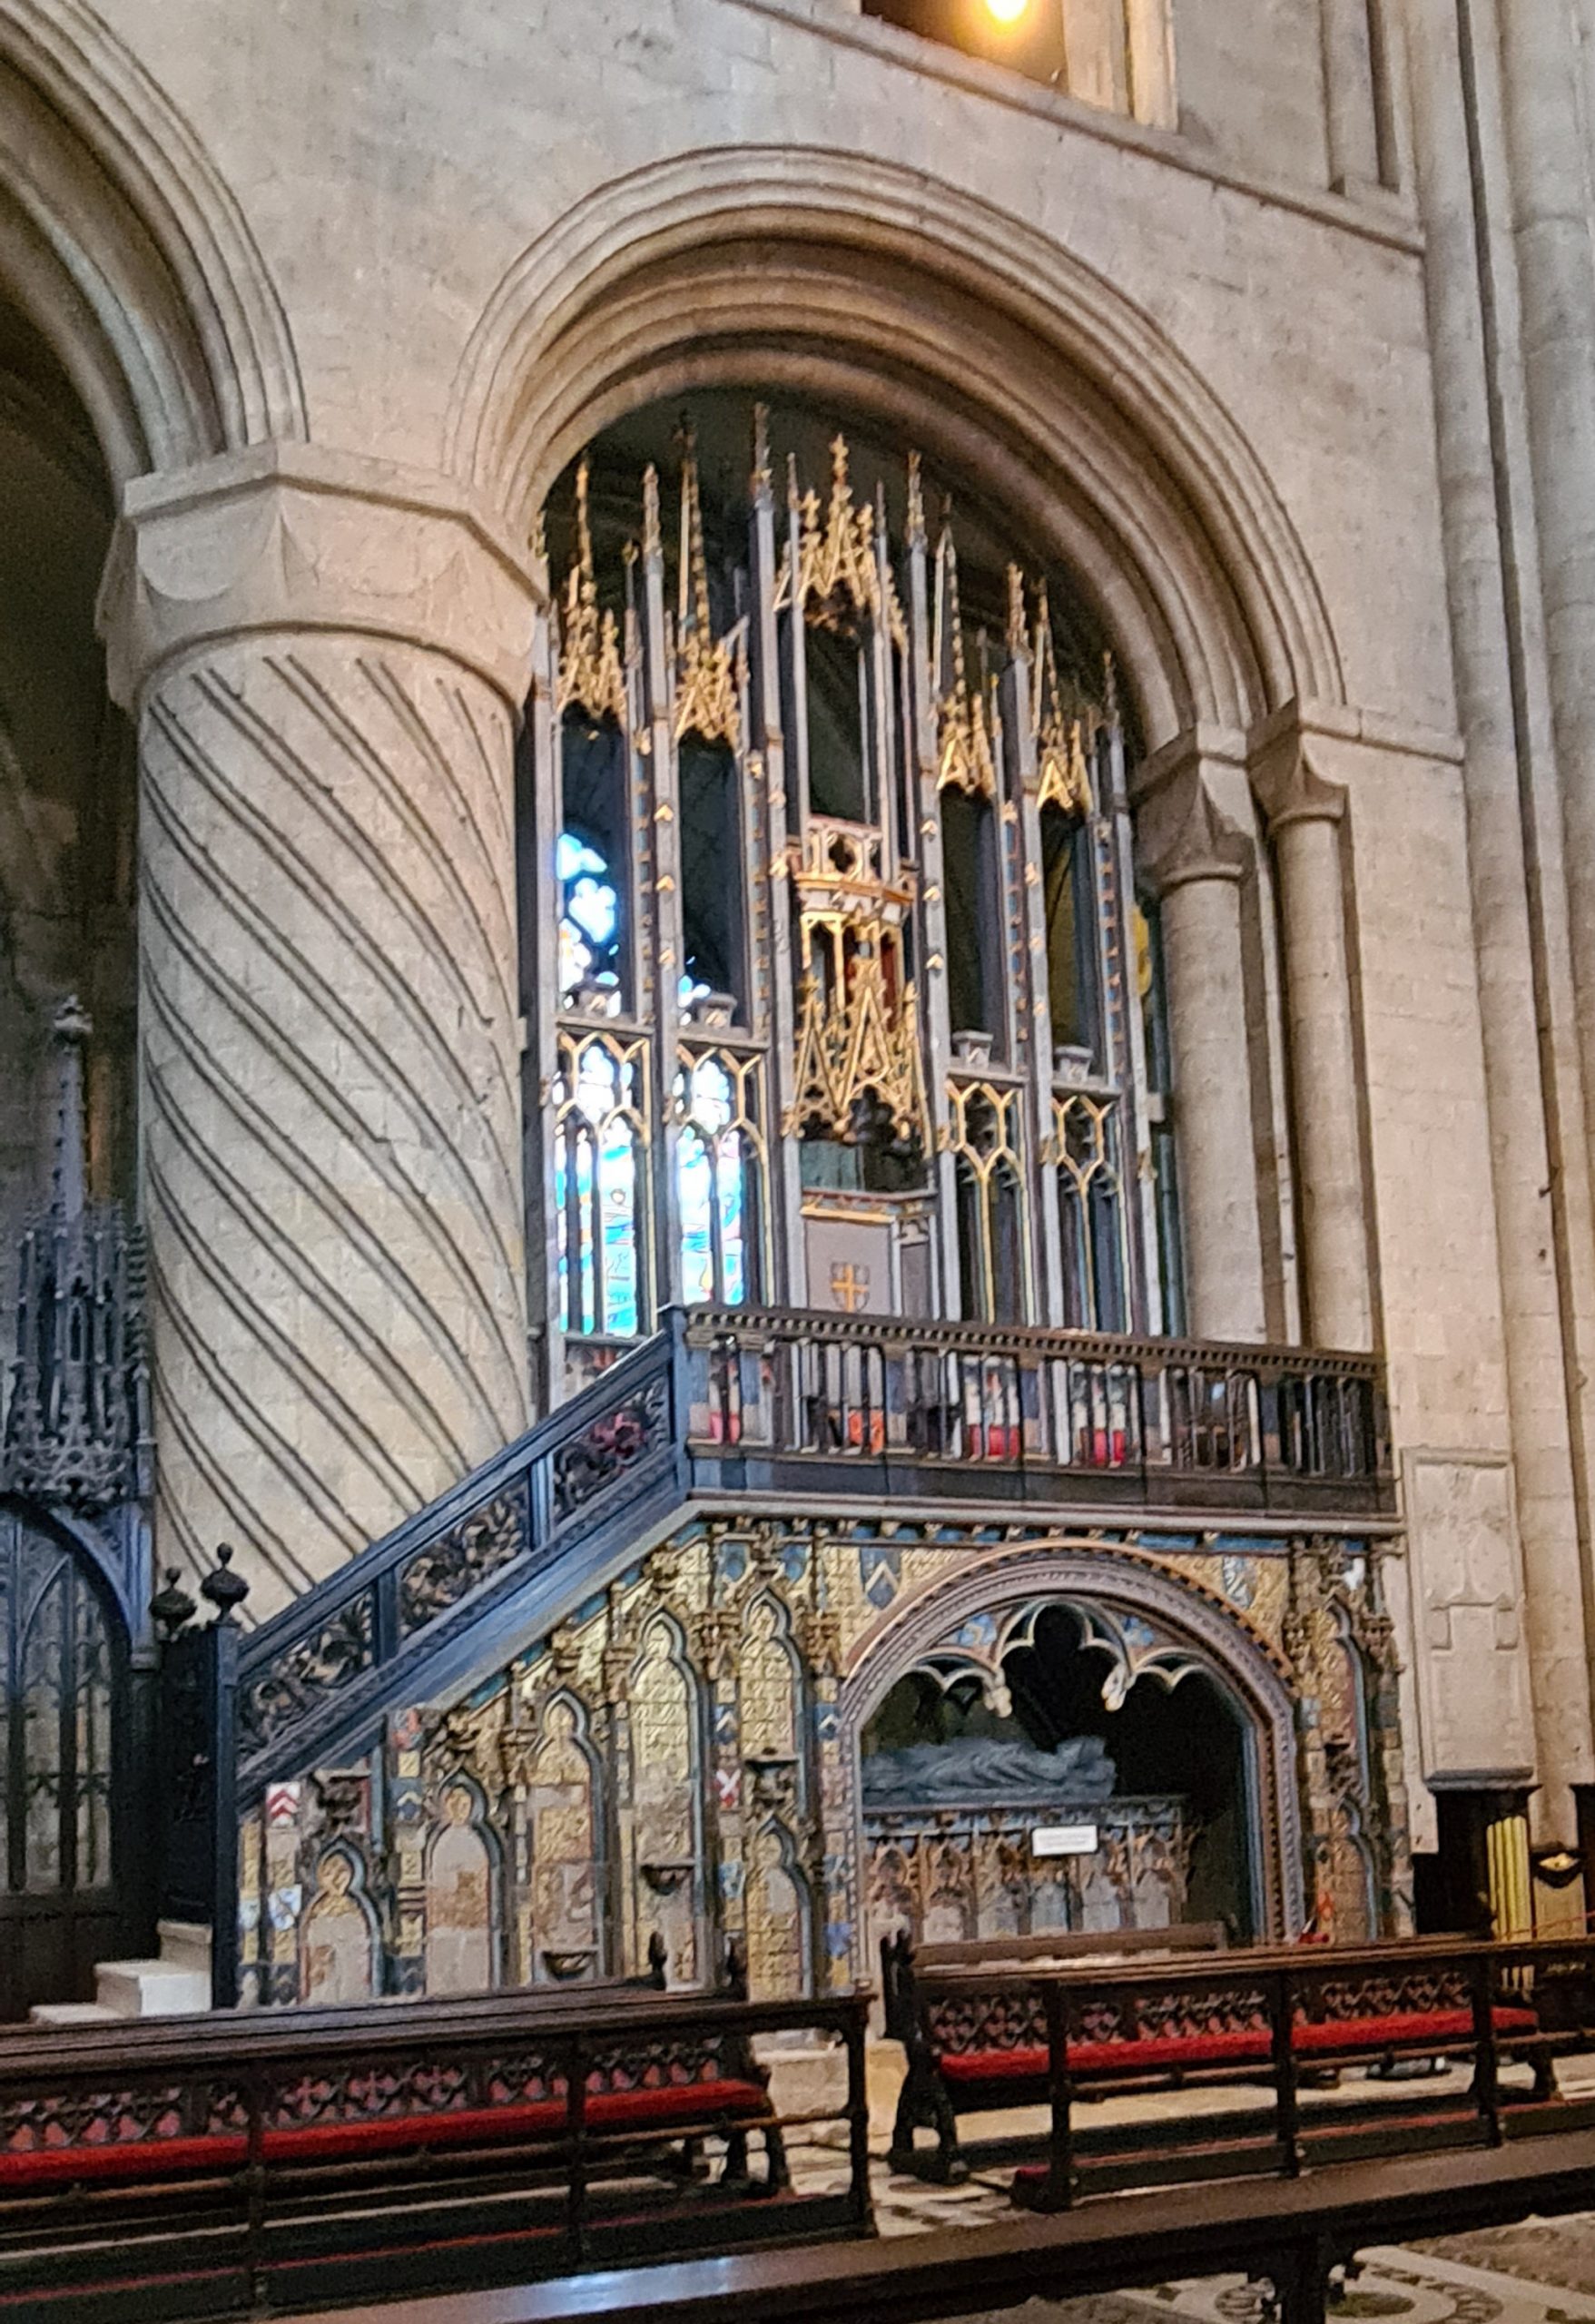 The organ at Durham cathedral